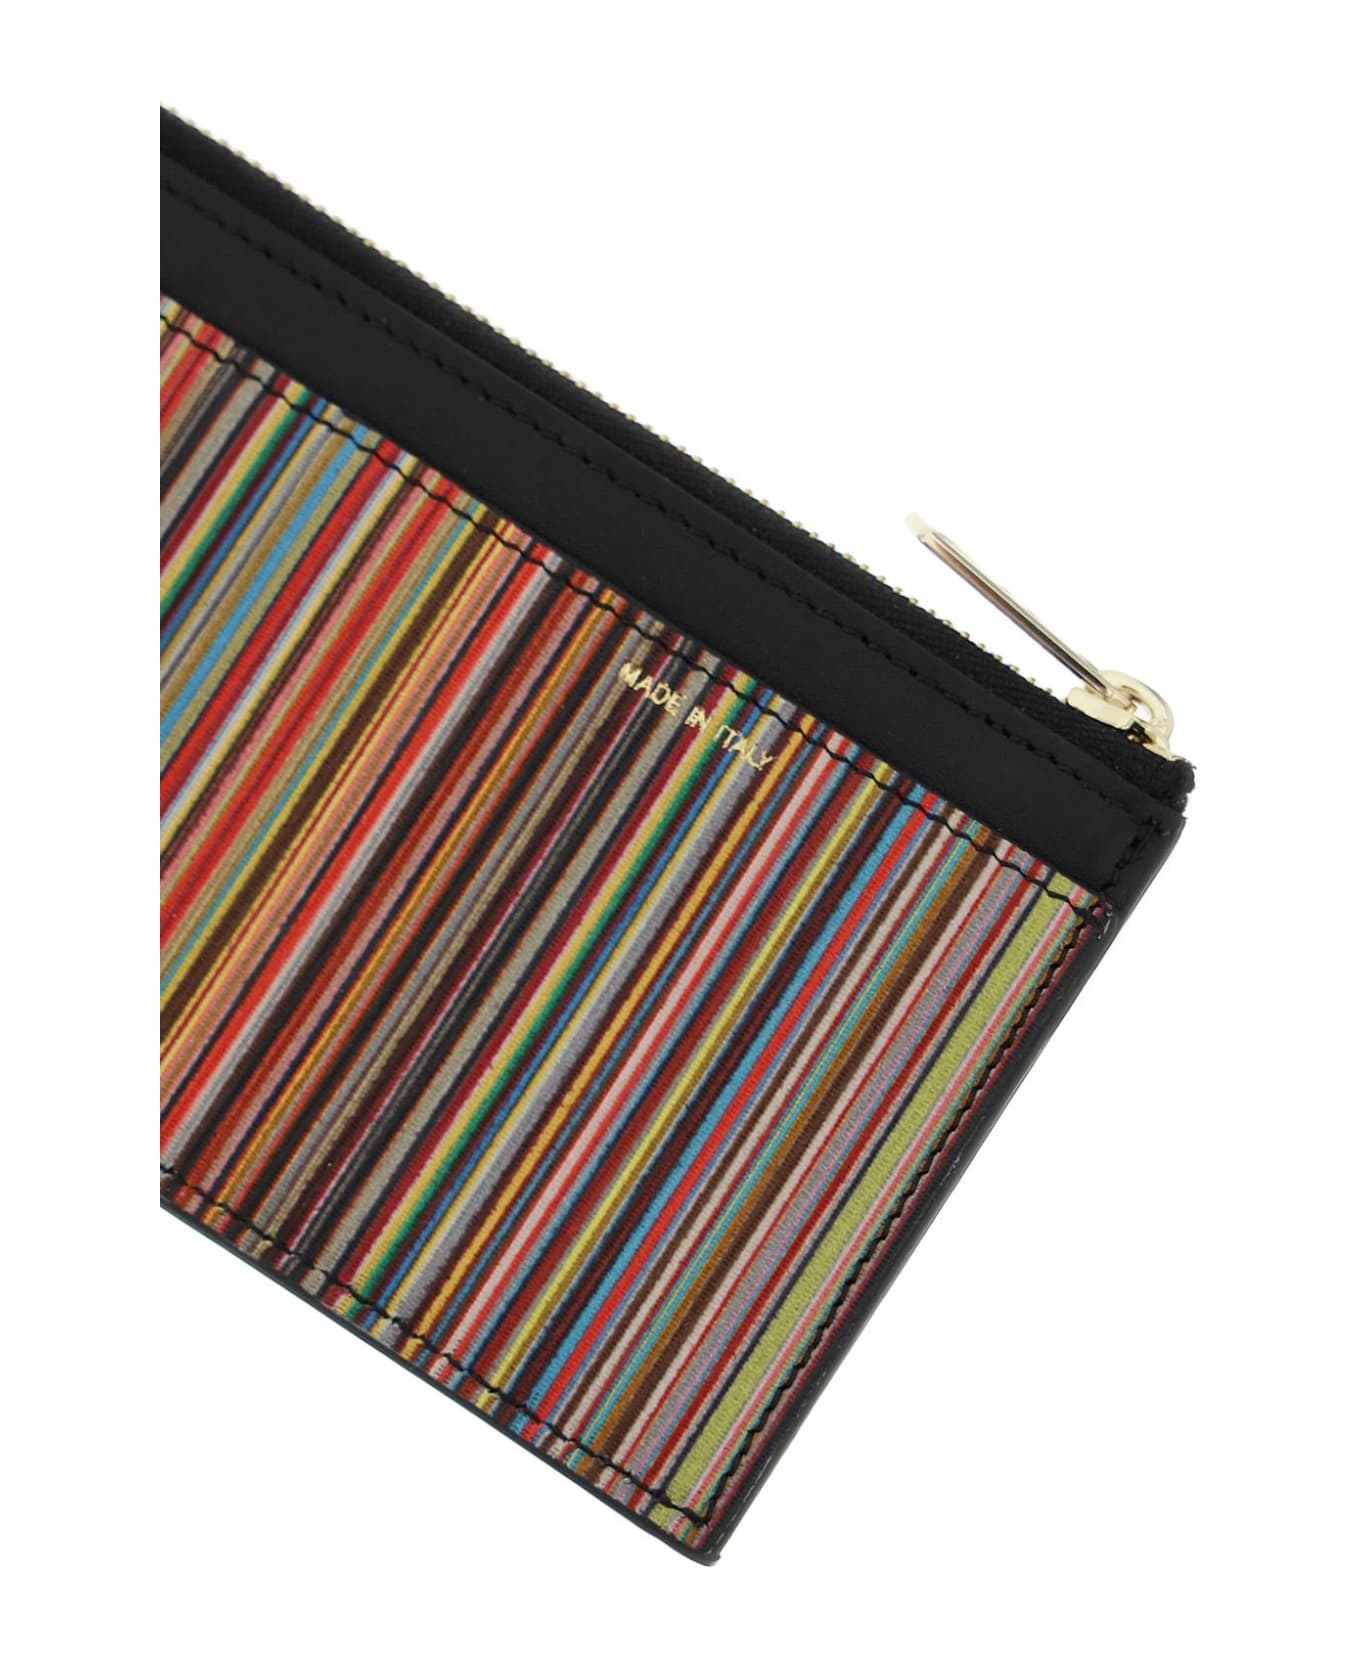 Paul Smith Signature Stripe Leather Card Holder - BLACK